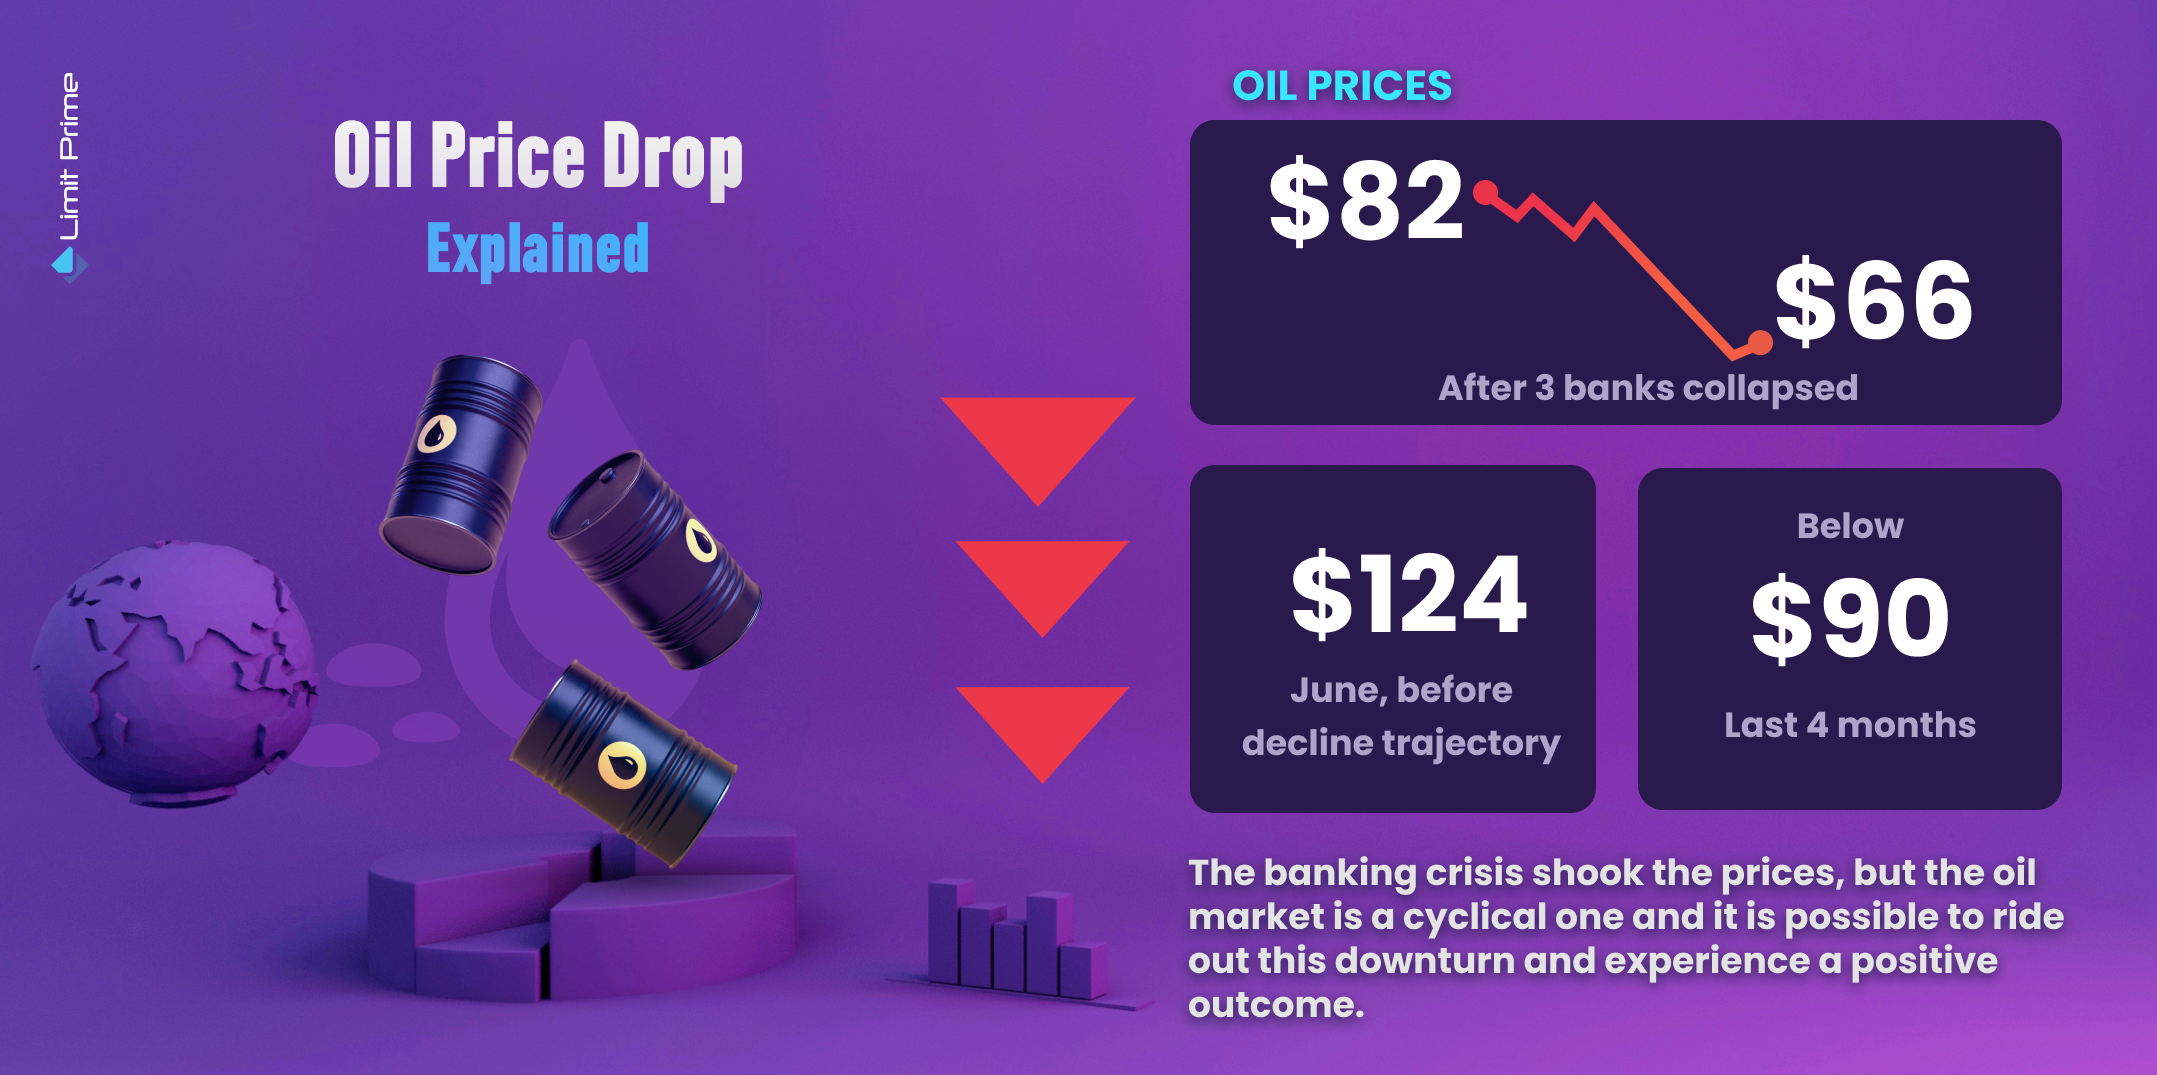 Oil price drop - explained